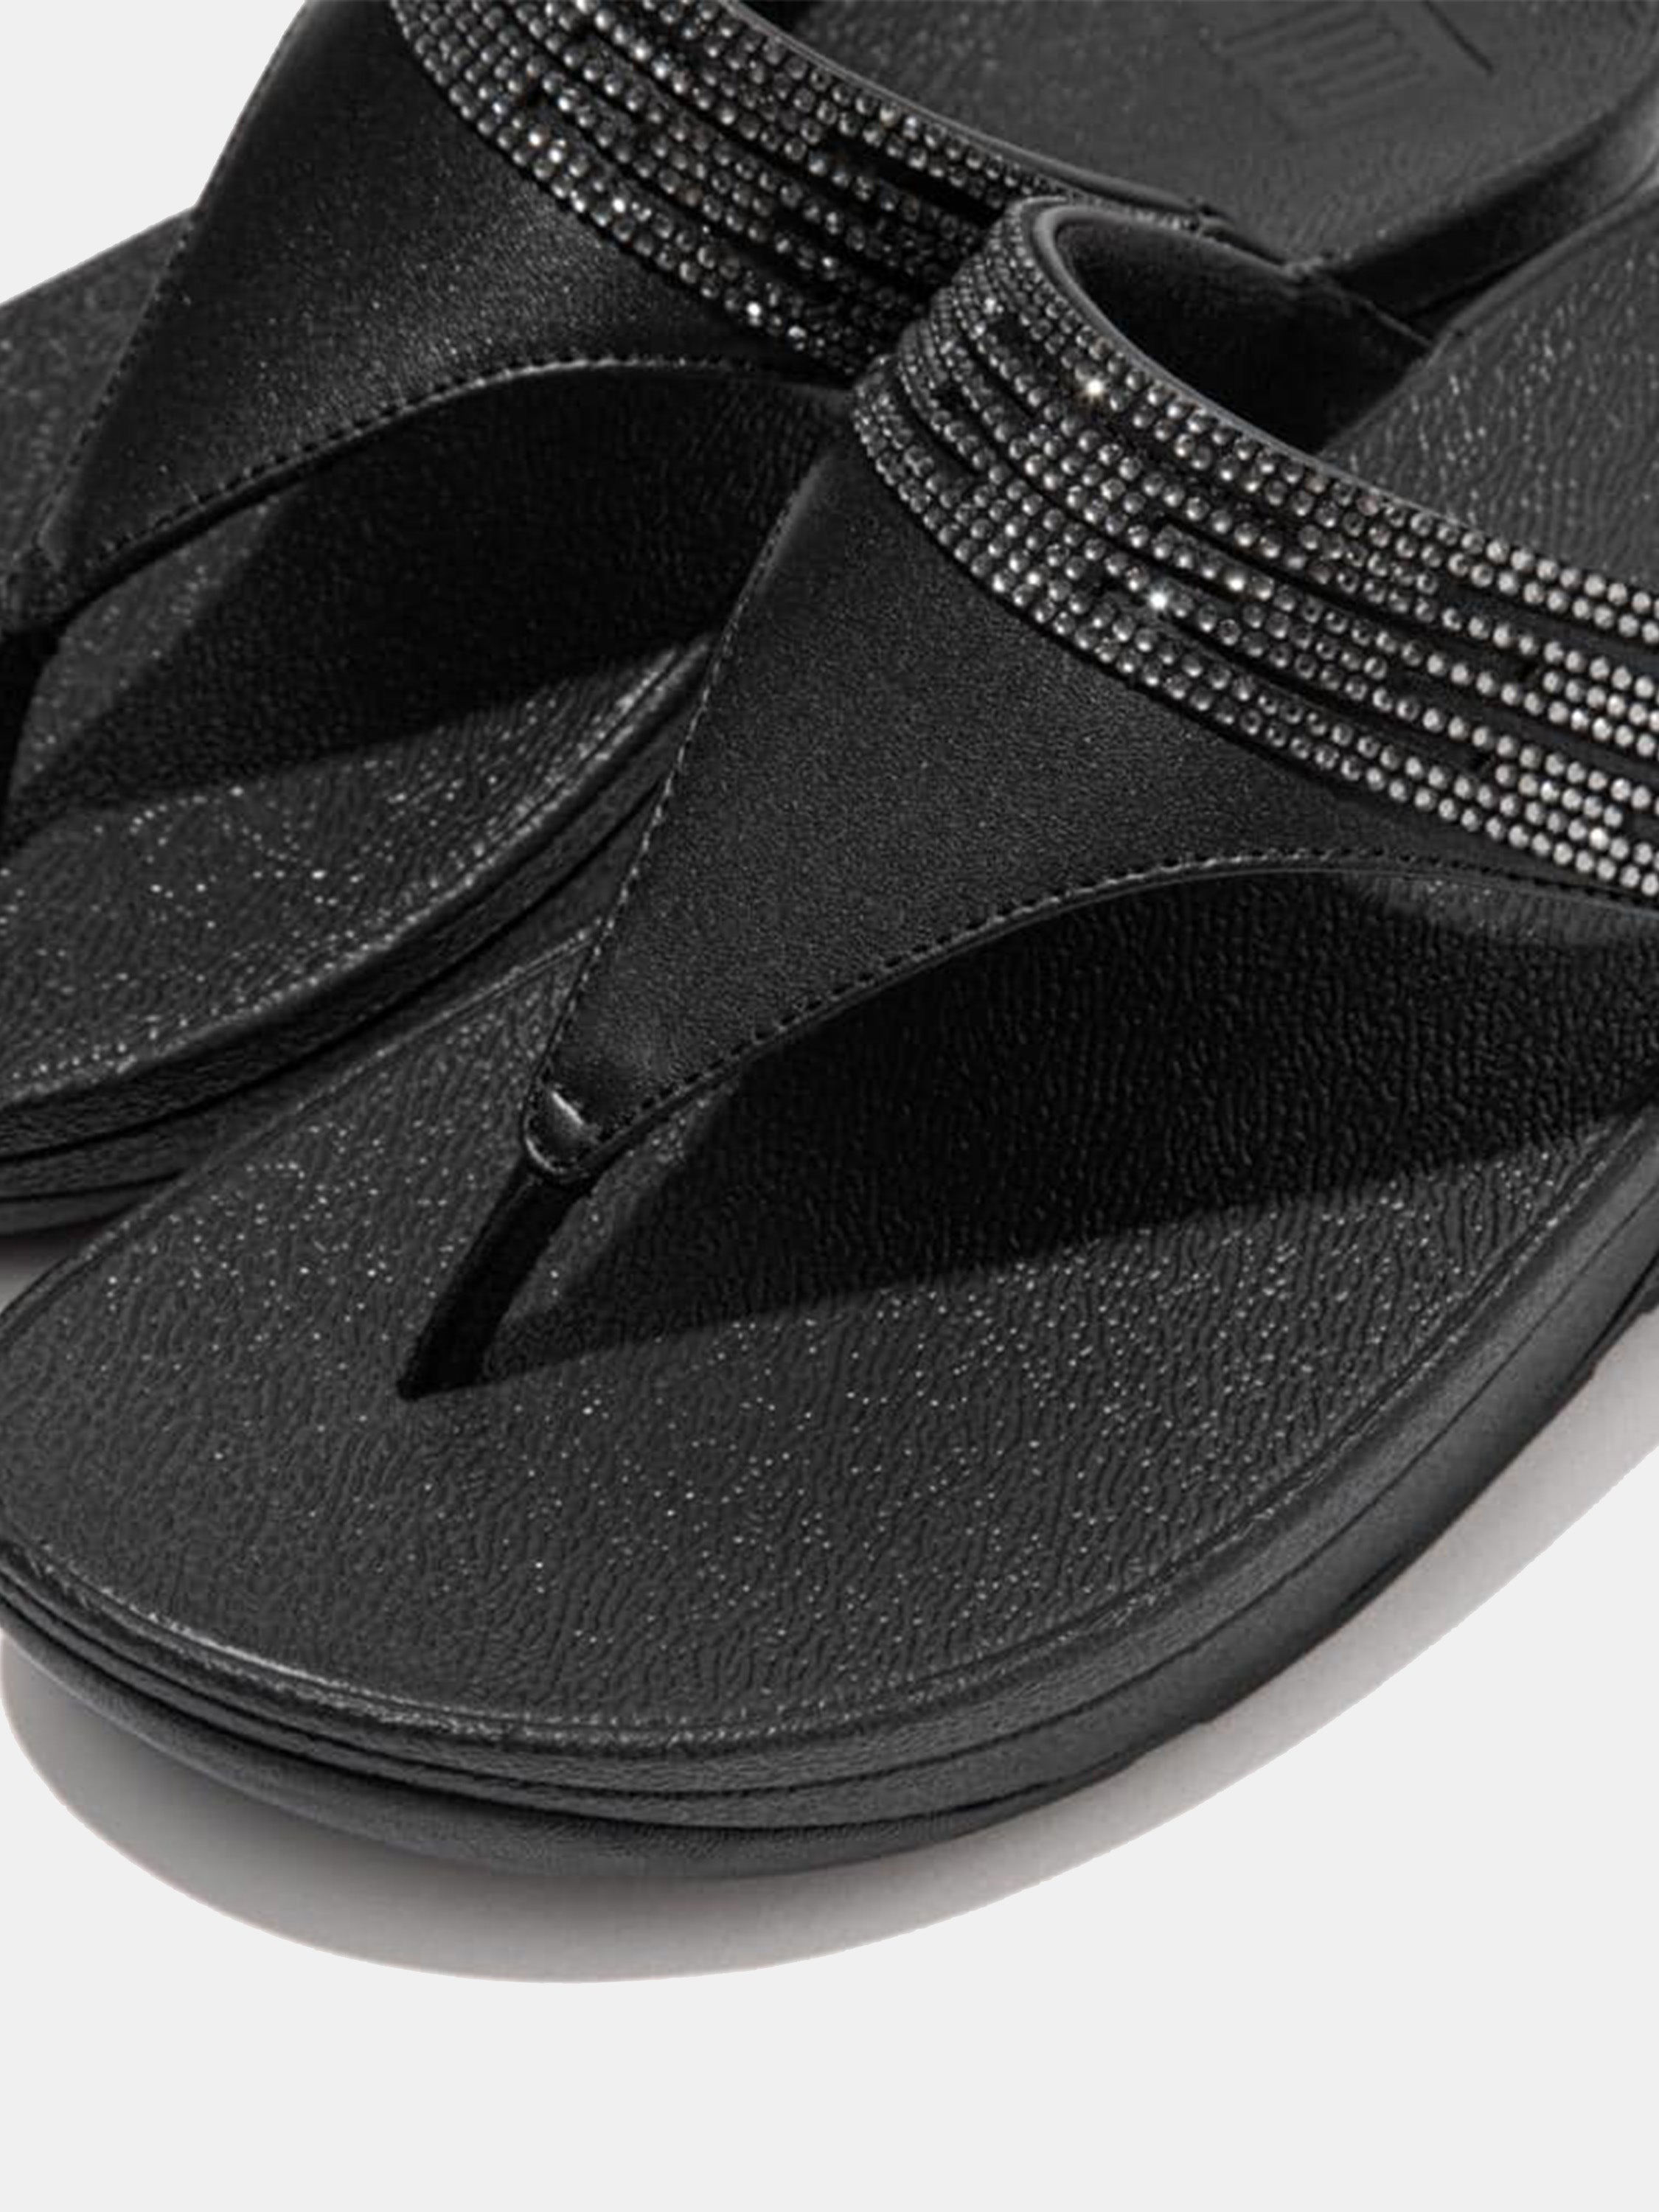 FitFlop Lulu Women's Lasercrystal Leather Toe-Post Sandals #color_Black